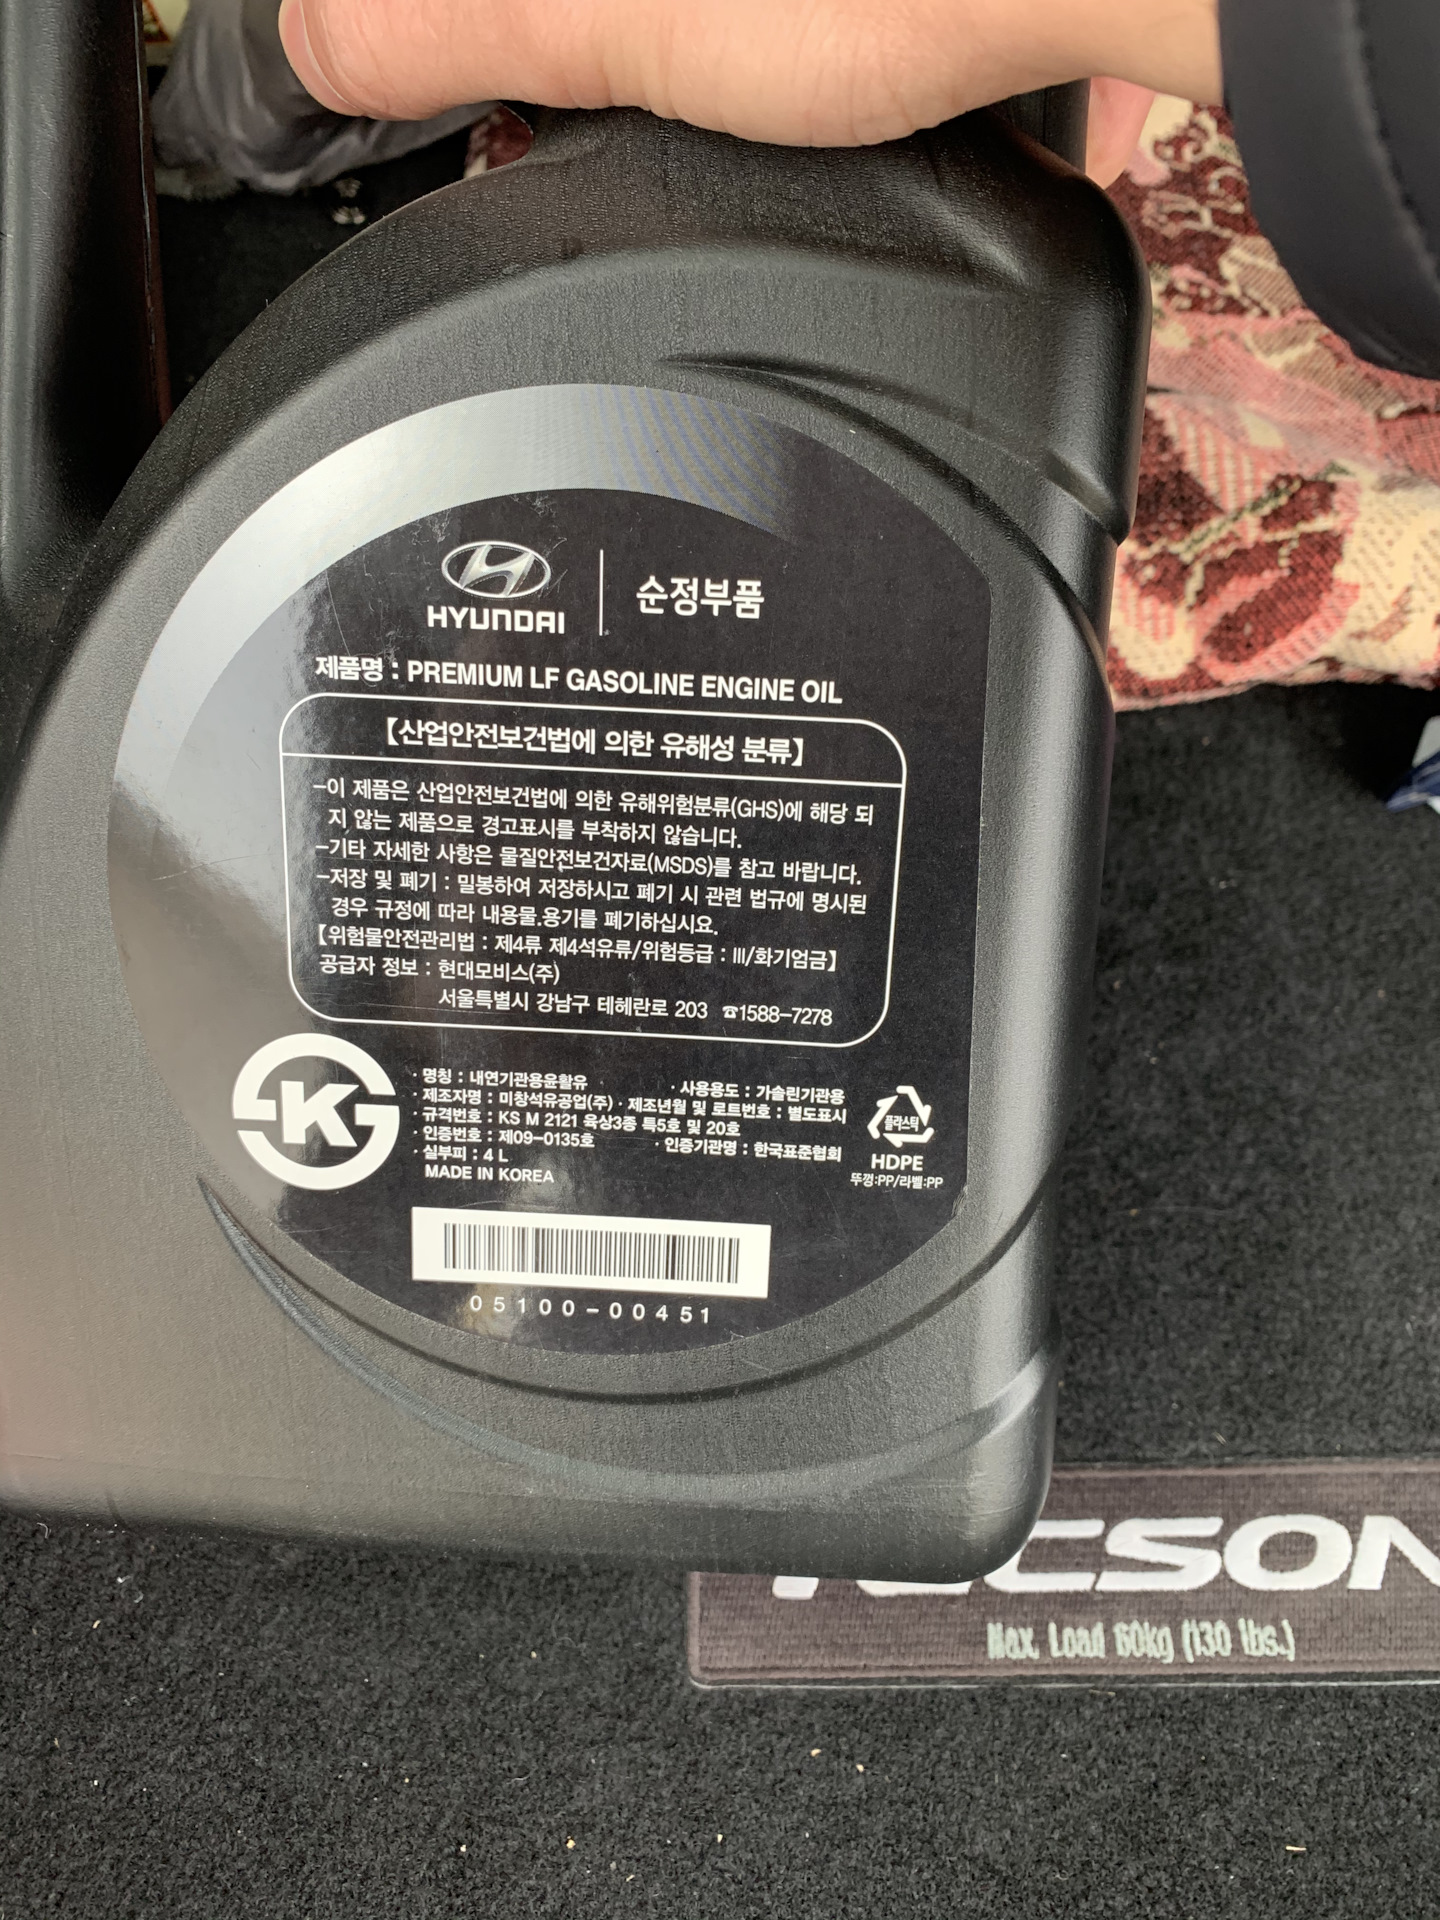 Масло туссан 2018. Hyundai Premium LF gasoline 5w-20. Премиум ЛФ 5w20 вес канистры. Прожарка Premium LF 5-20 bmwservice.